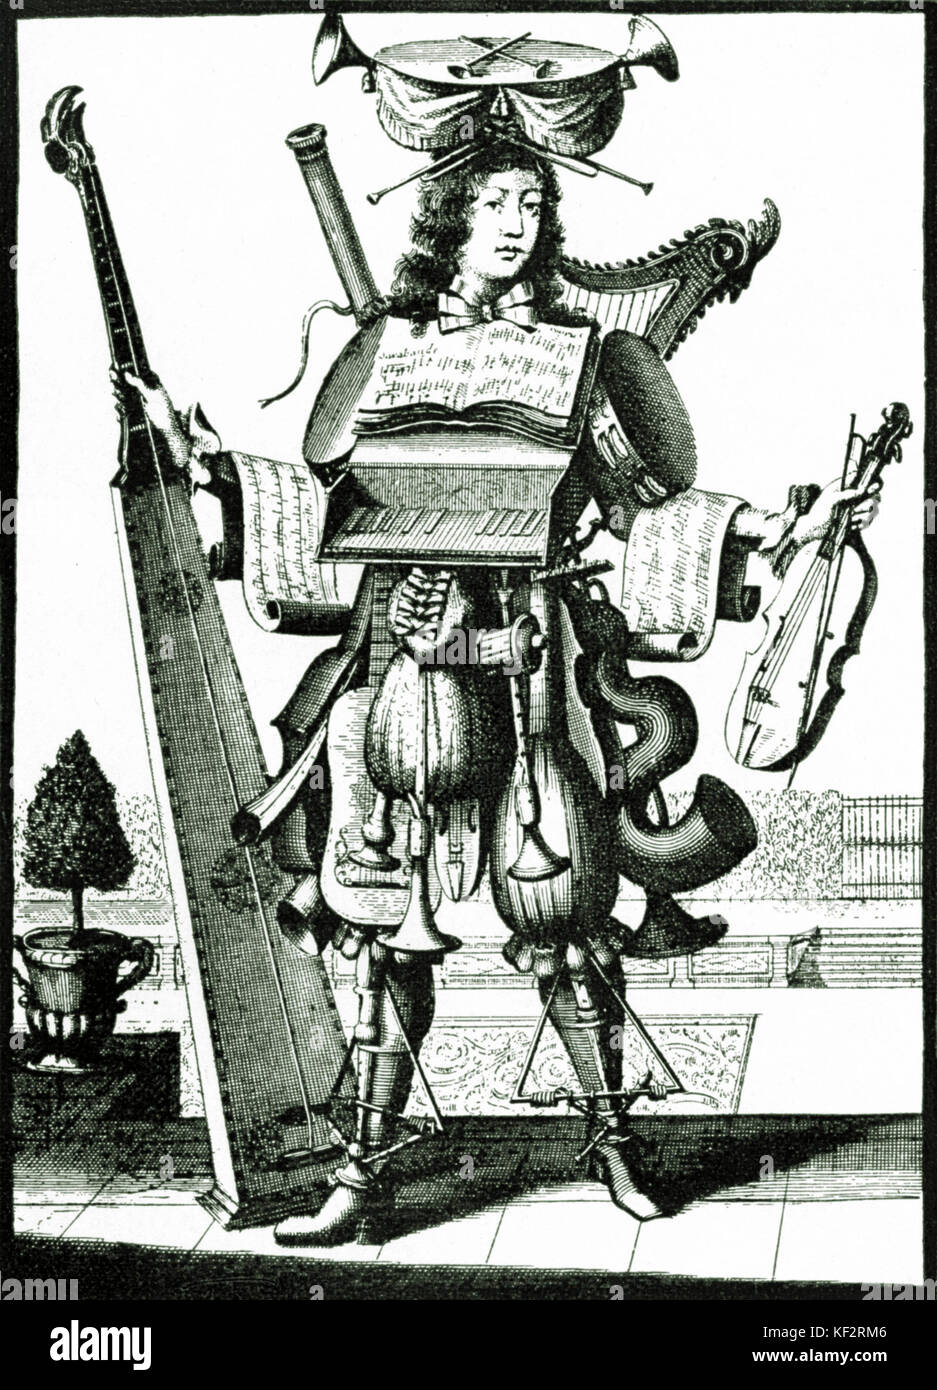 'Habit de Musicien' - Baroque Musician - parody of musician 's costume Early Baroque Musician in costume made up from instruments: Serpent; cornet; lute; violin; tromba marina; triangle; pochette; harp; bassoon etc Stock Photo